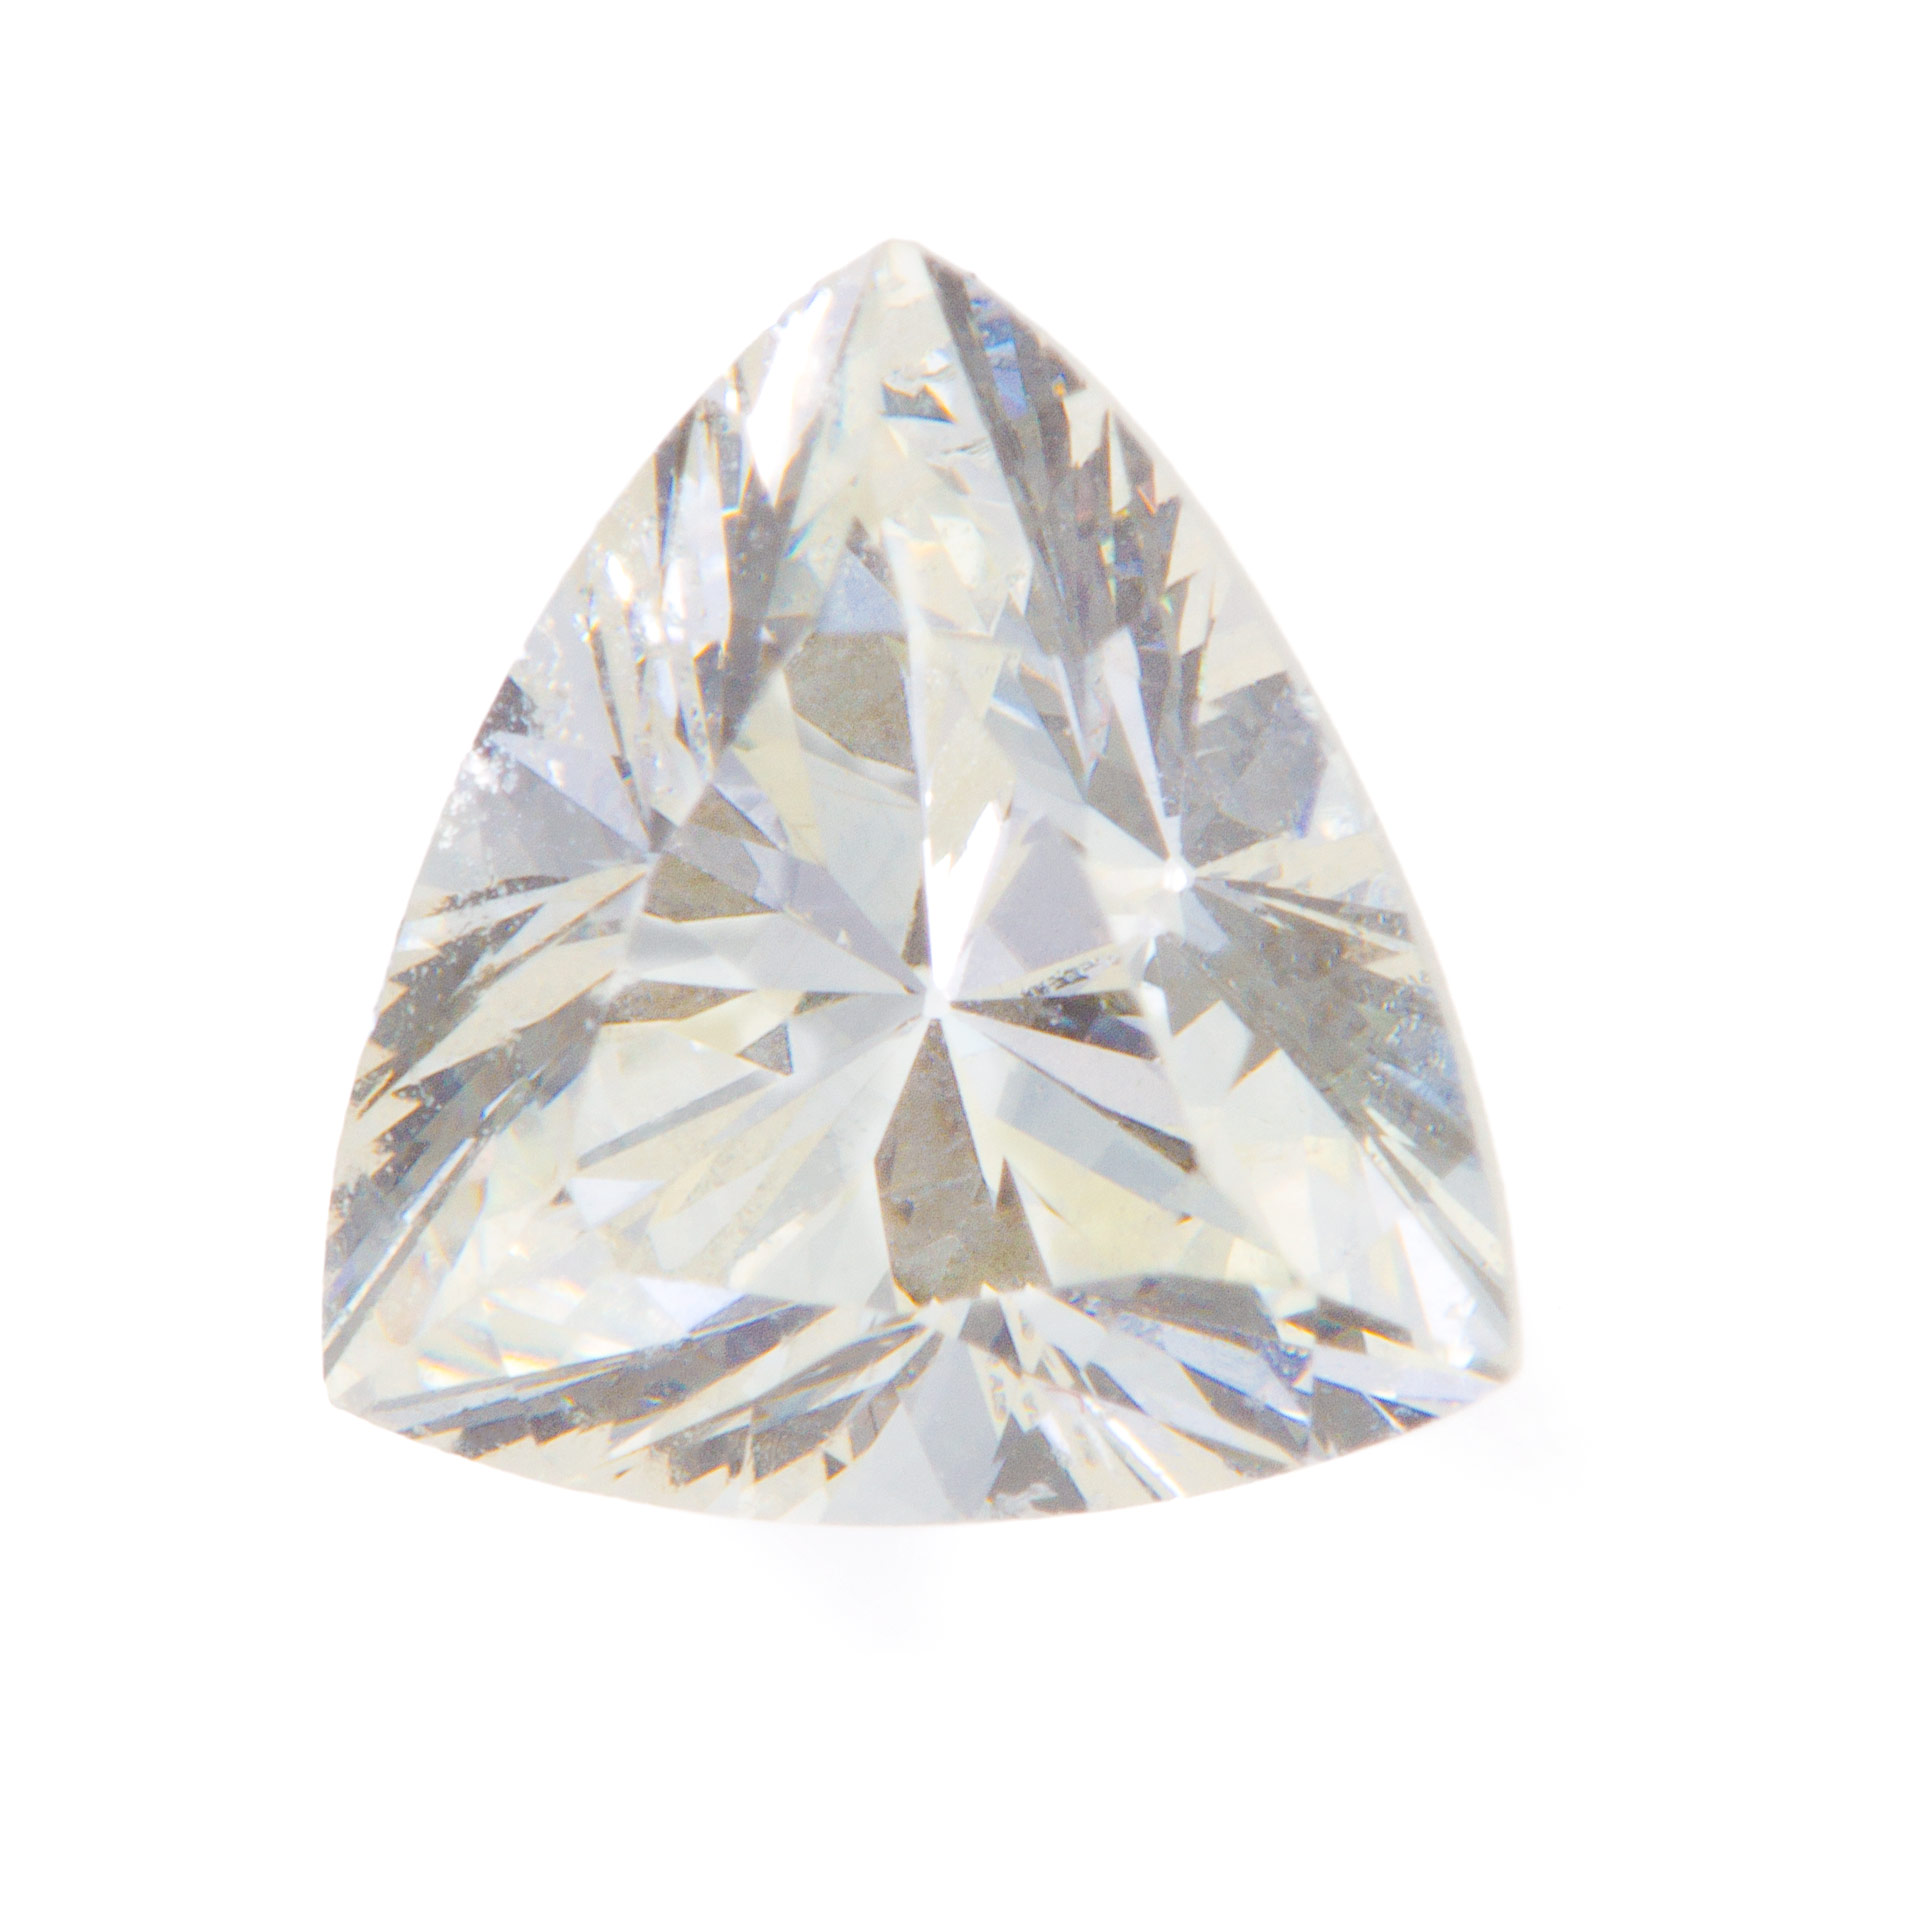 Triangle shaped diamond 0.54 ct (K color, VS1 clarity)